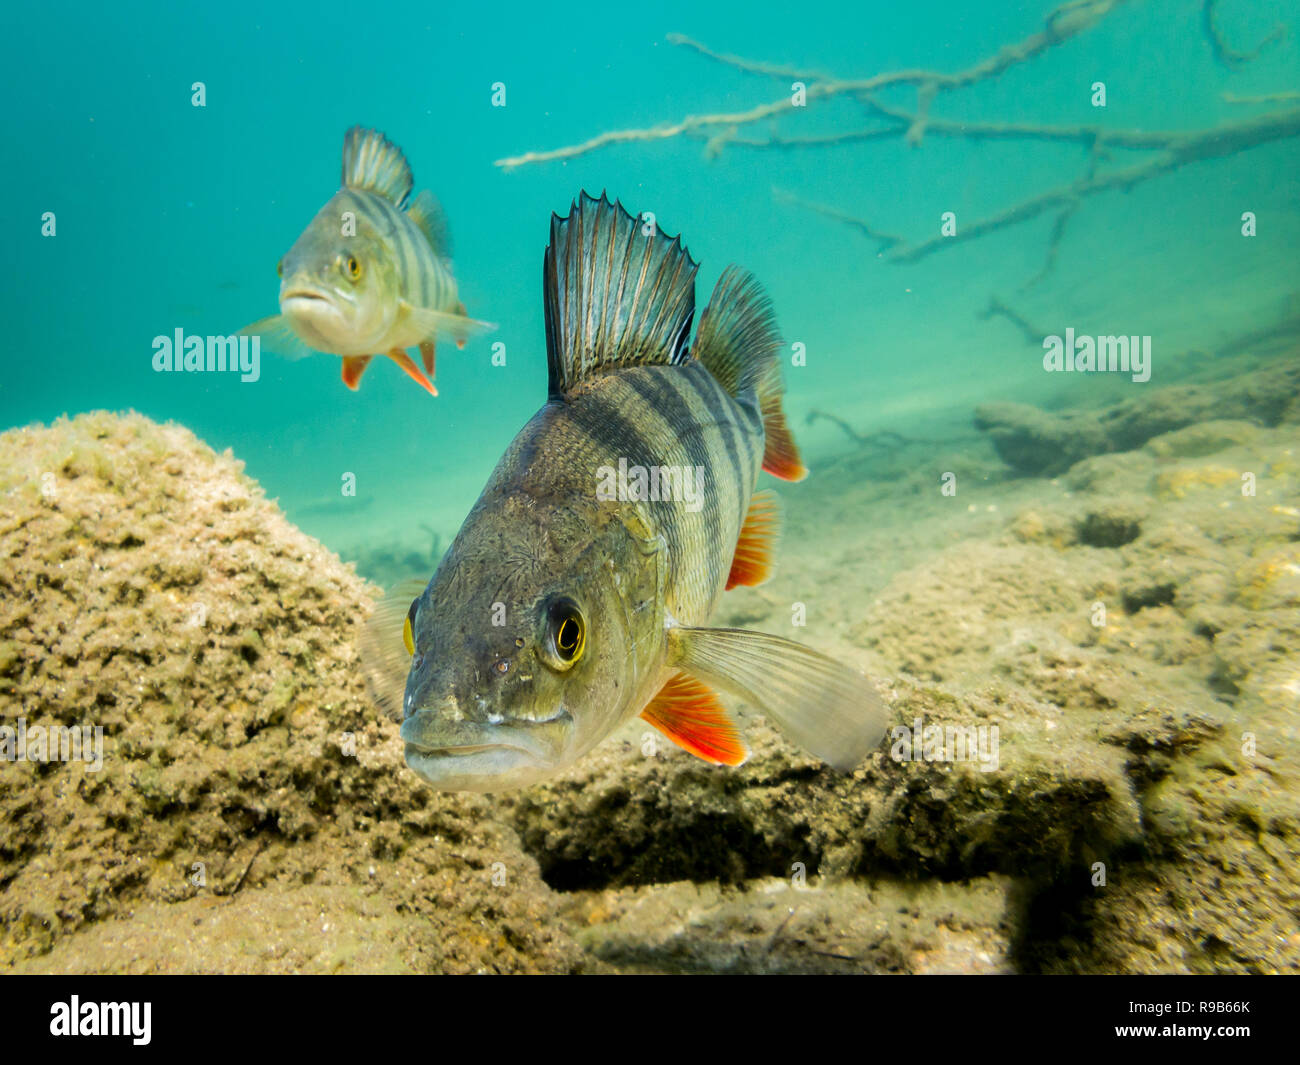 European perch (Perca fluviatilis) swimming towards camera. Underwater close-up shot. Stock Photo